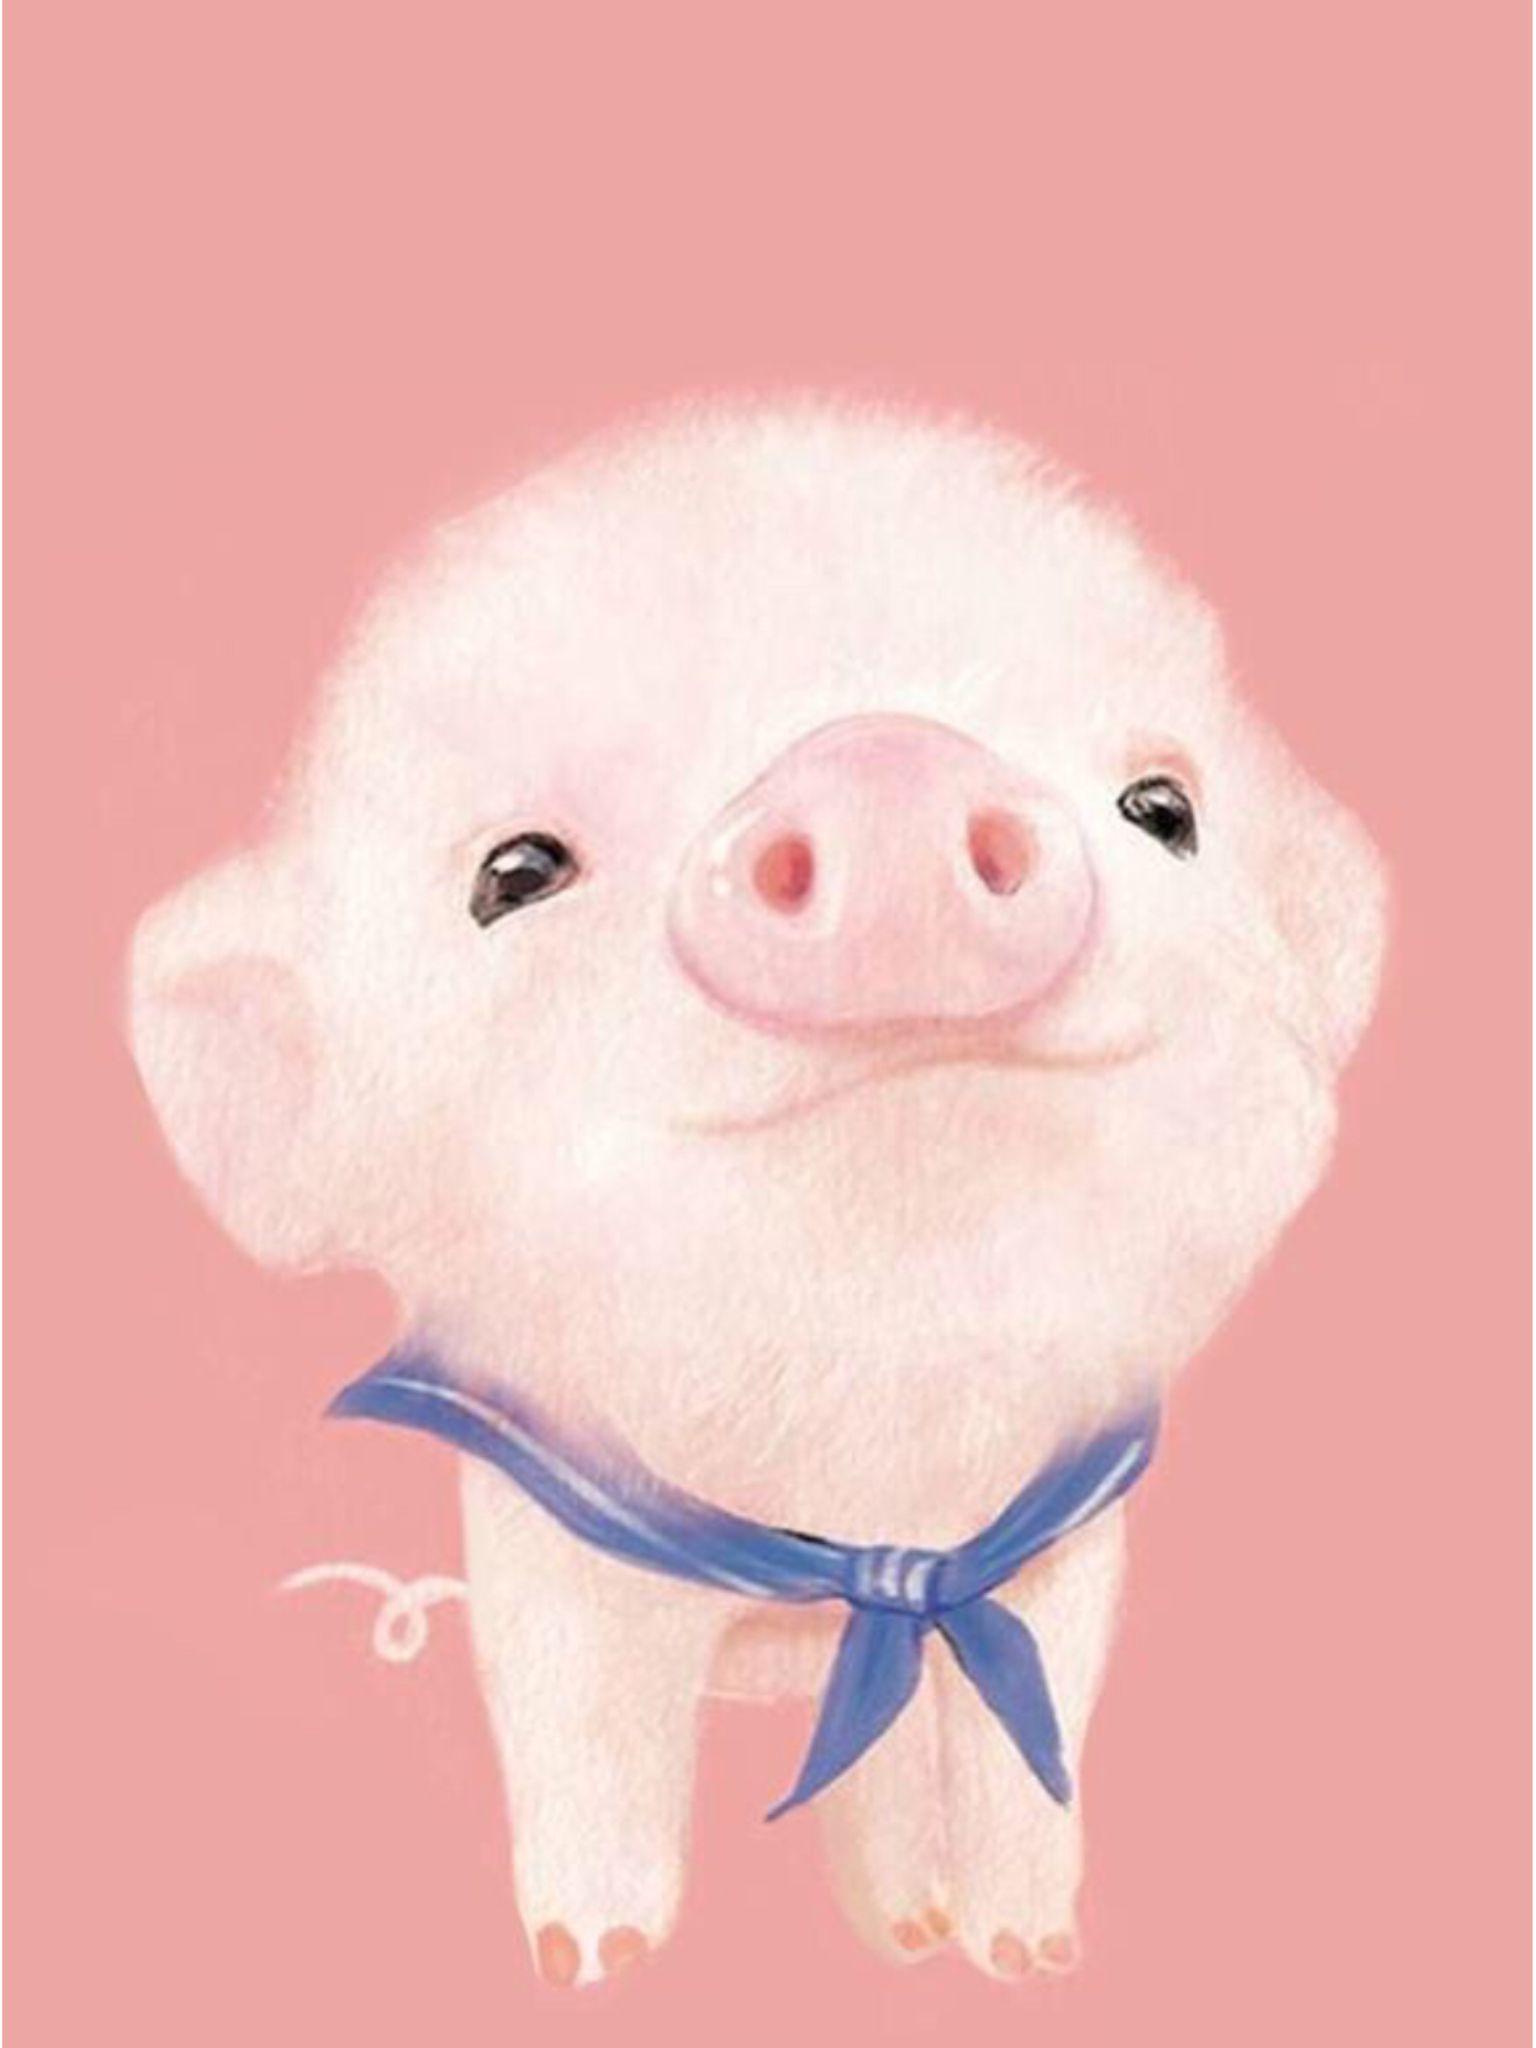 Pig wallpaper, Pig illustration, Cute pigs.com